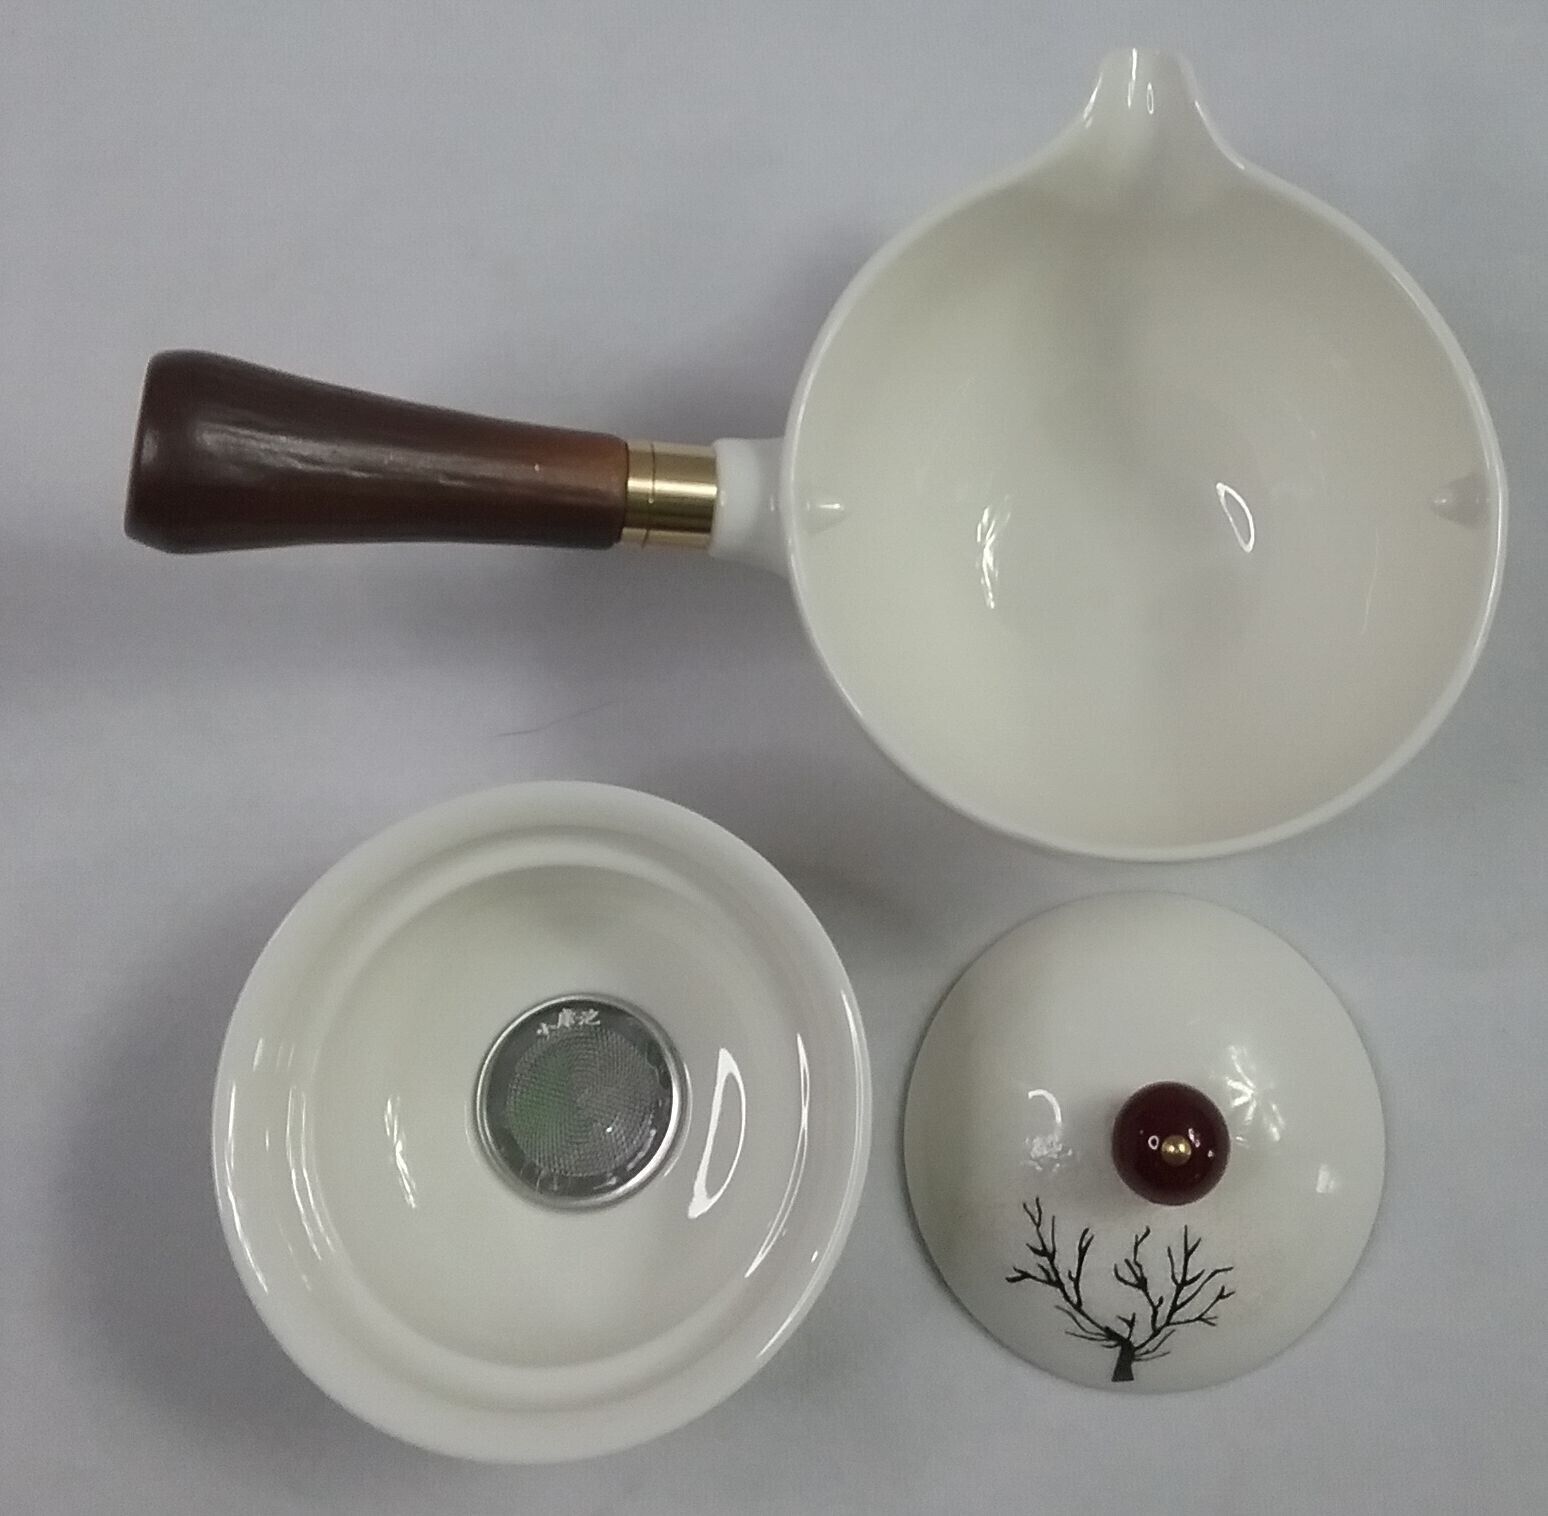 New, White Ceramic Chinese Tea Pot w/Black Forest Design